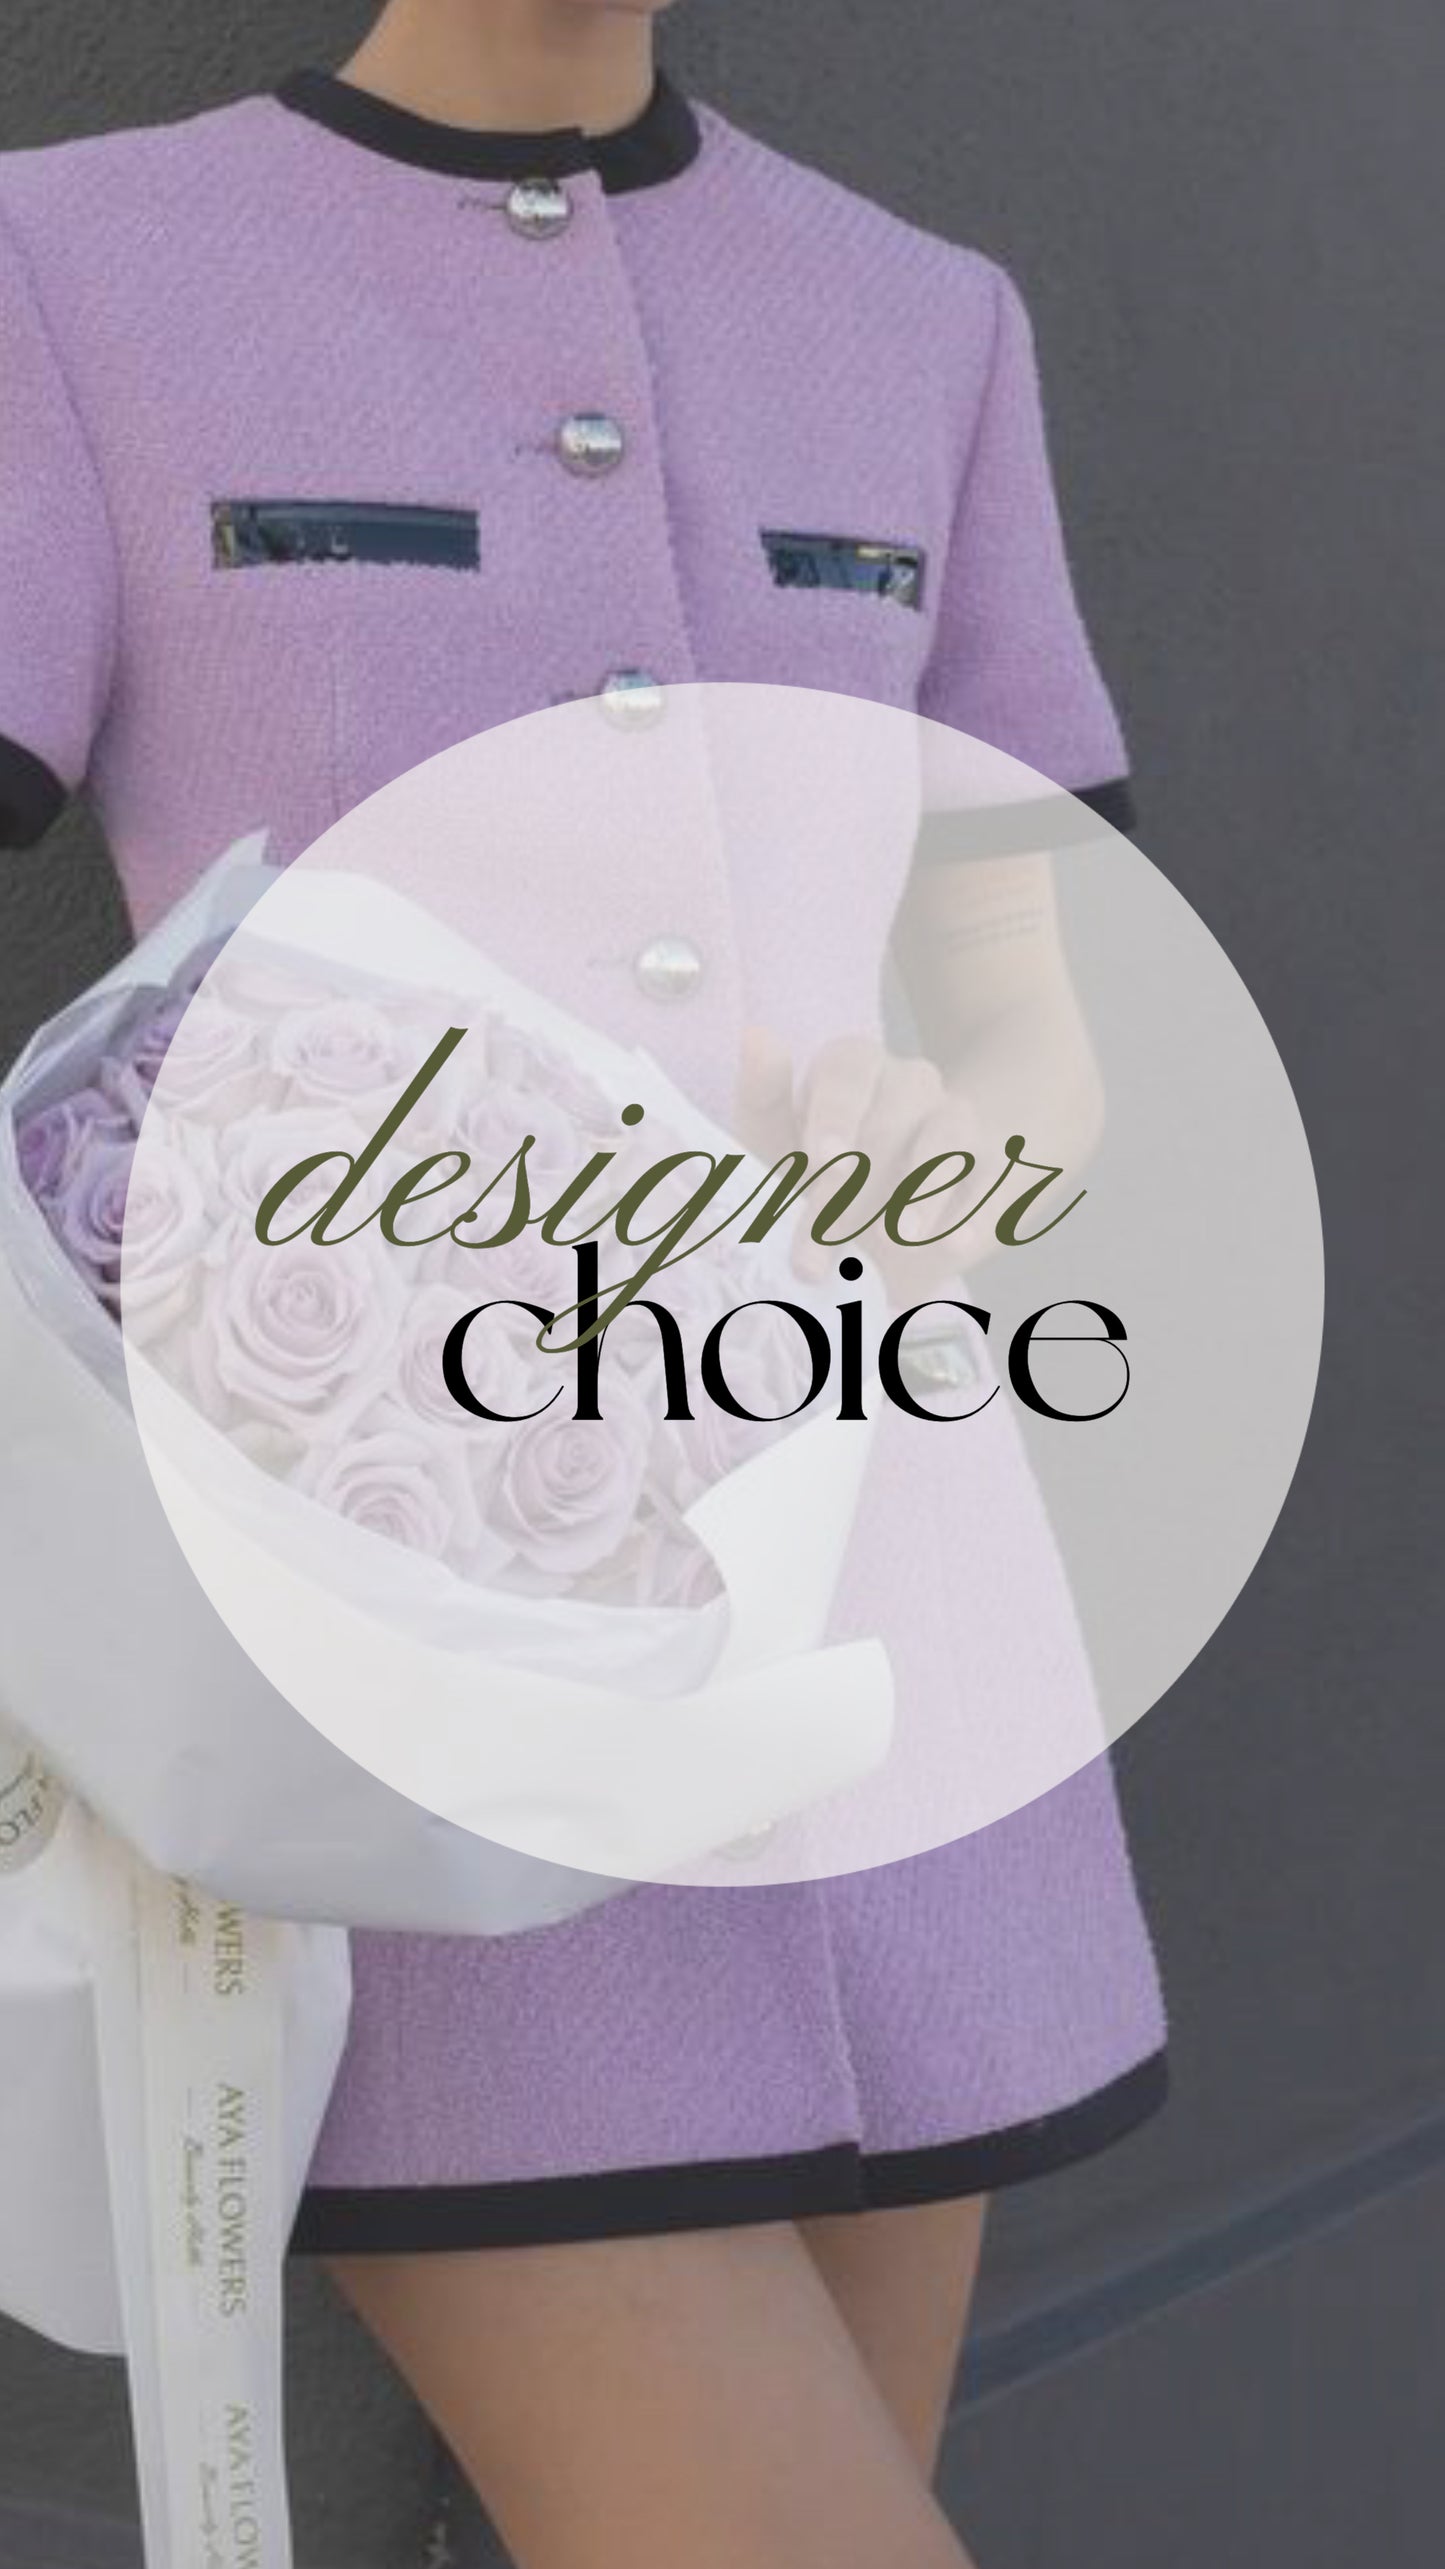 Designers choice